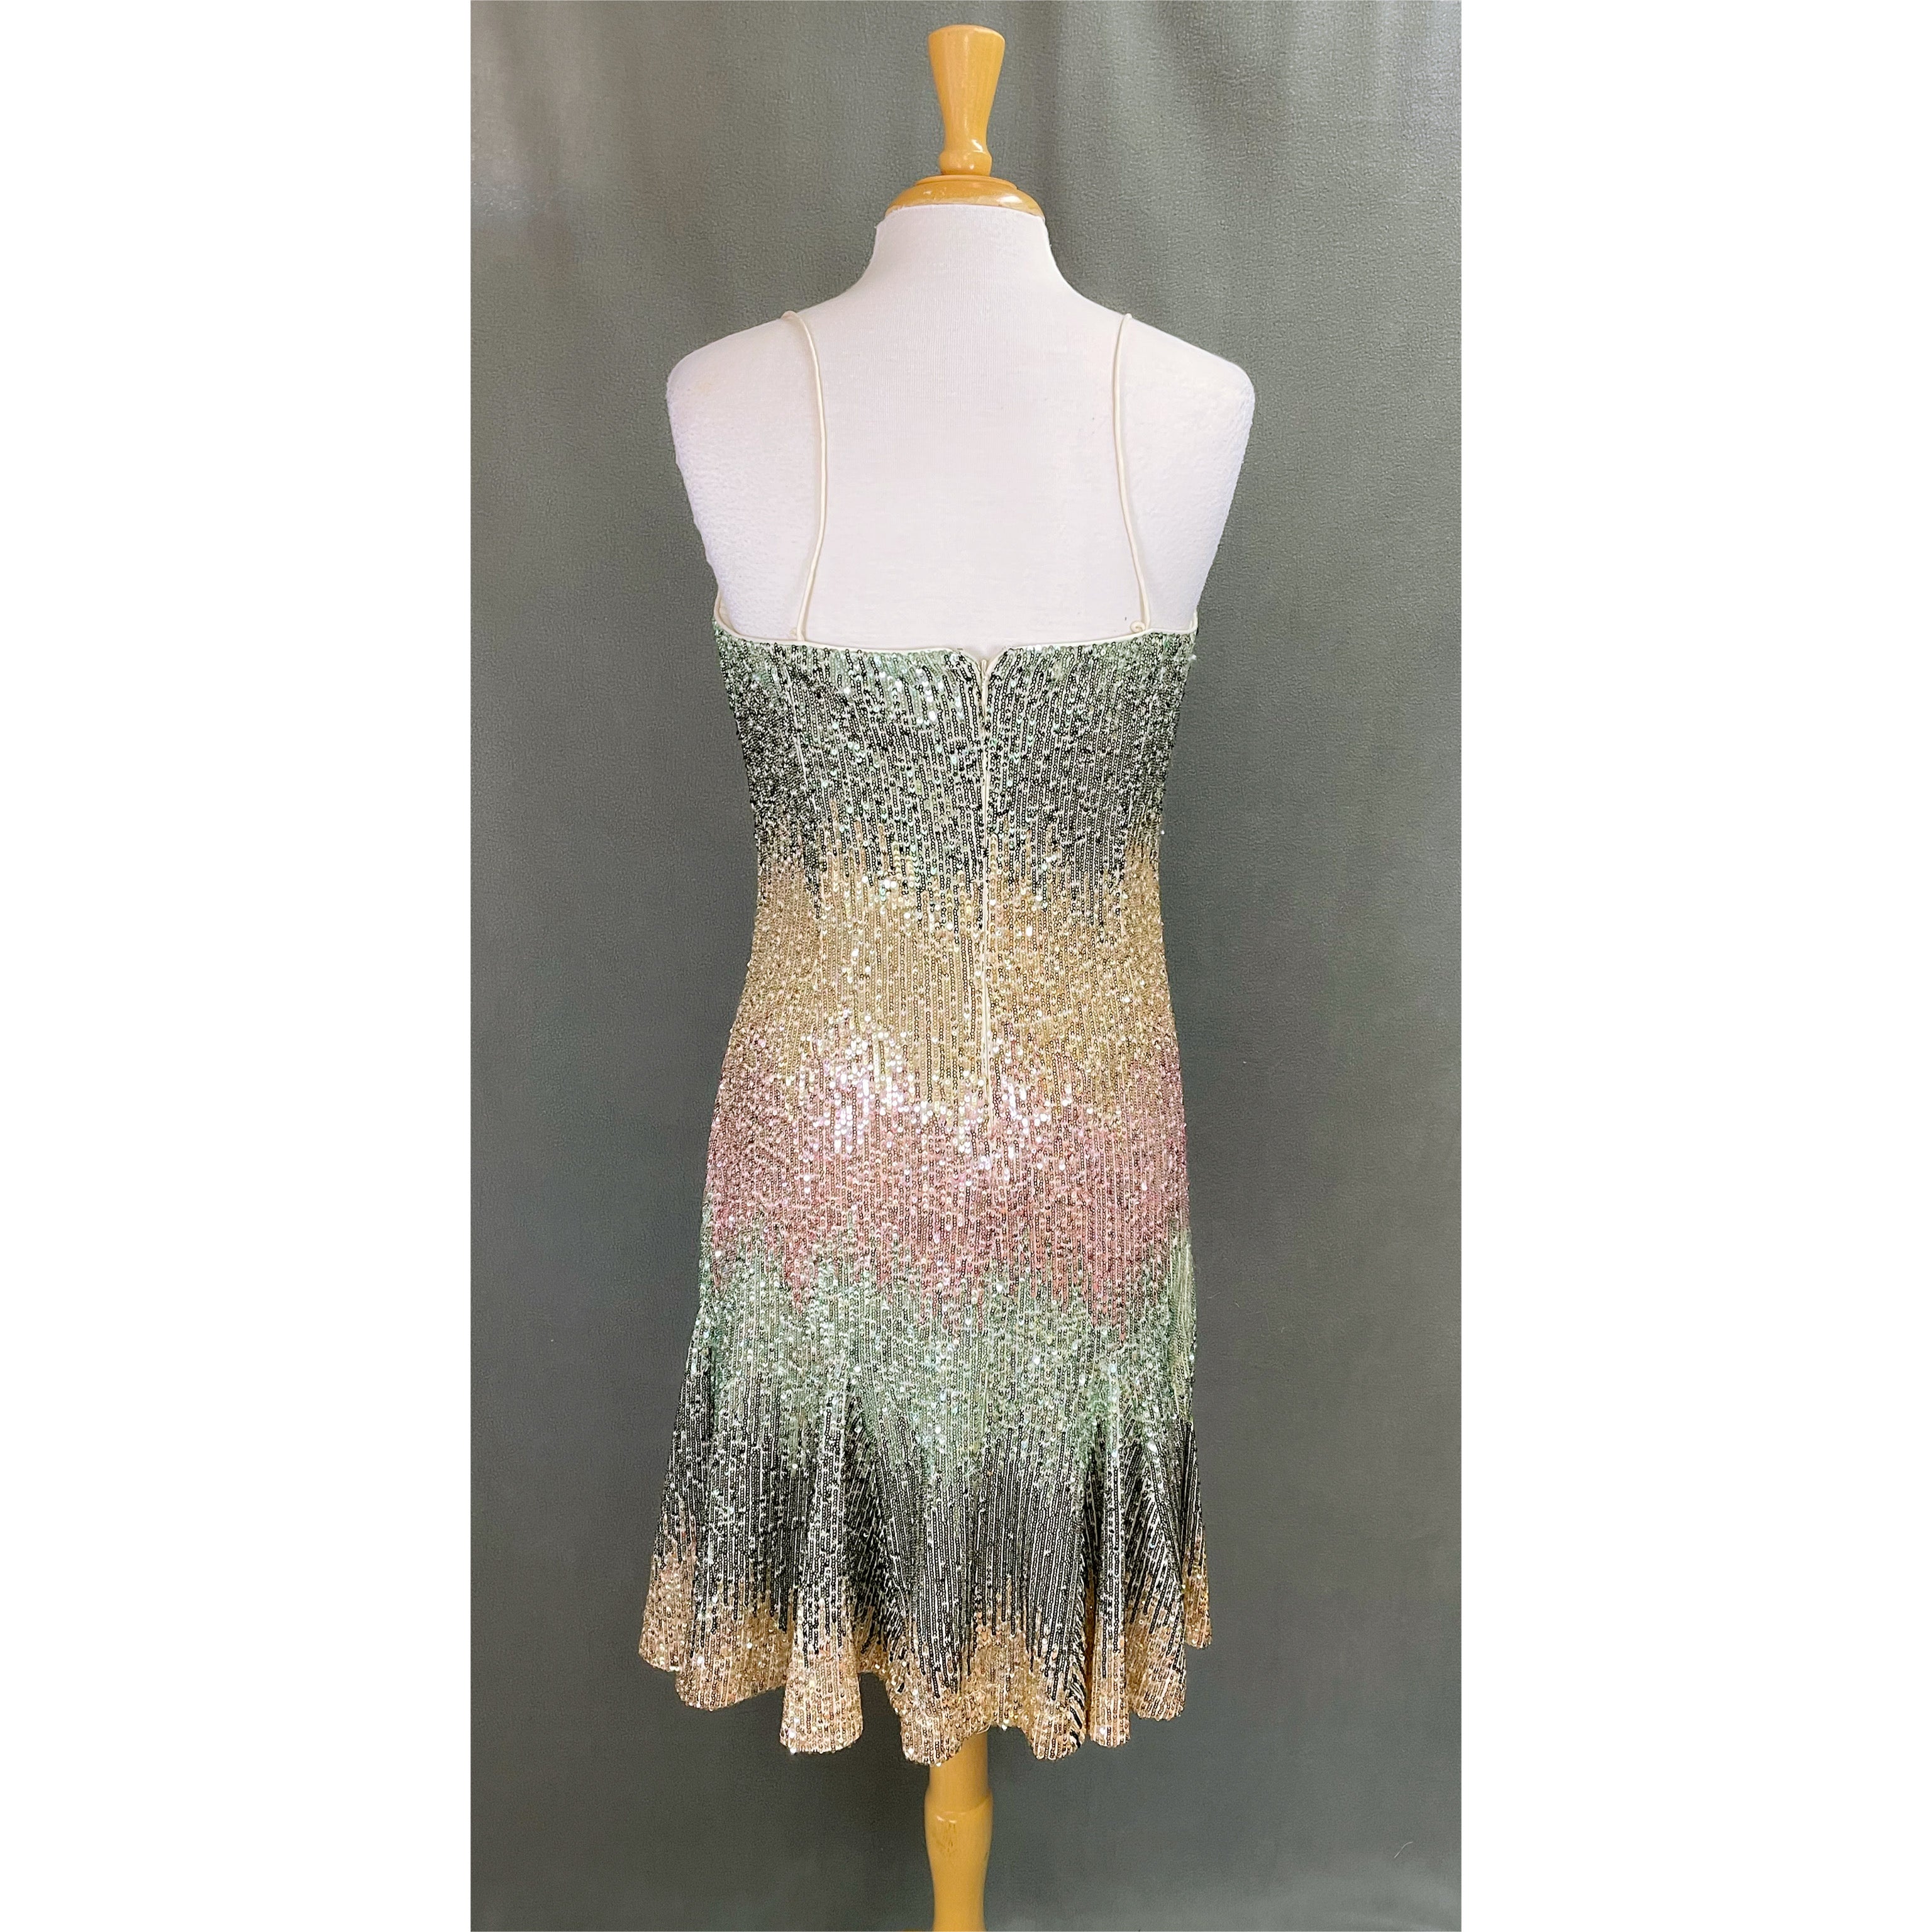 Badgley Mischka multi-color sequin dress, size 10